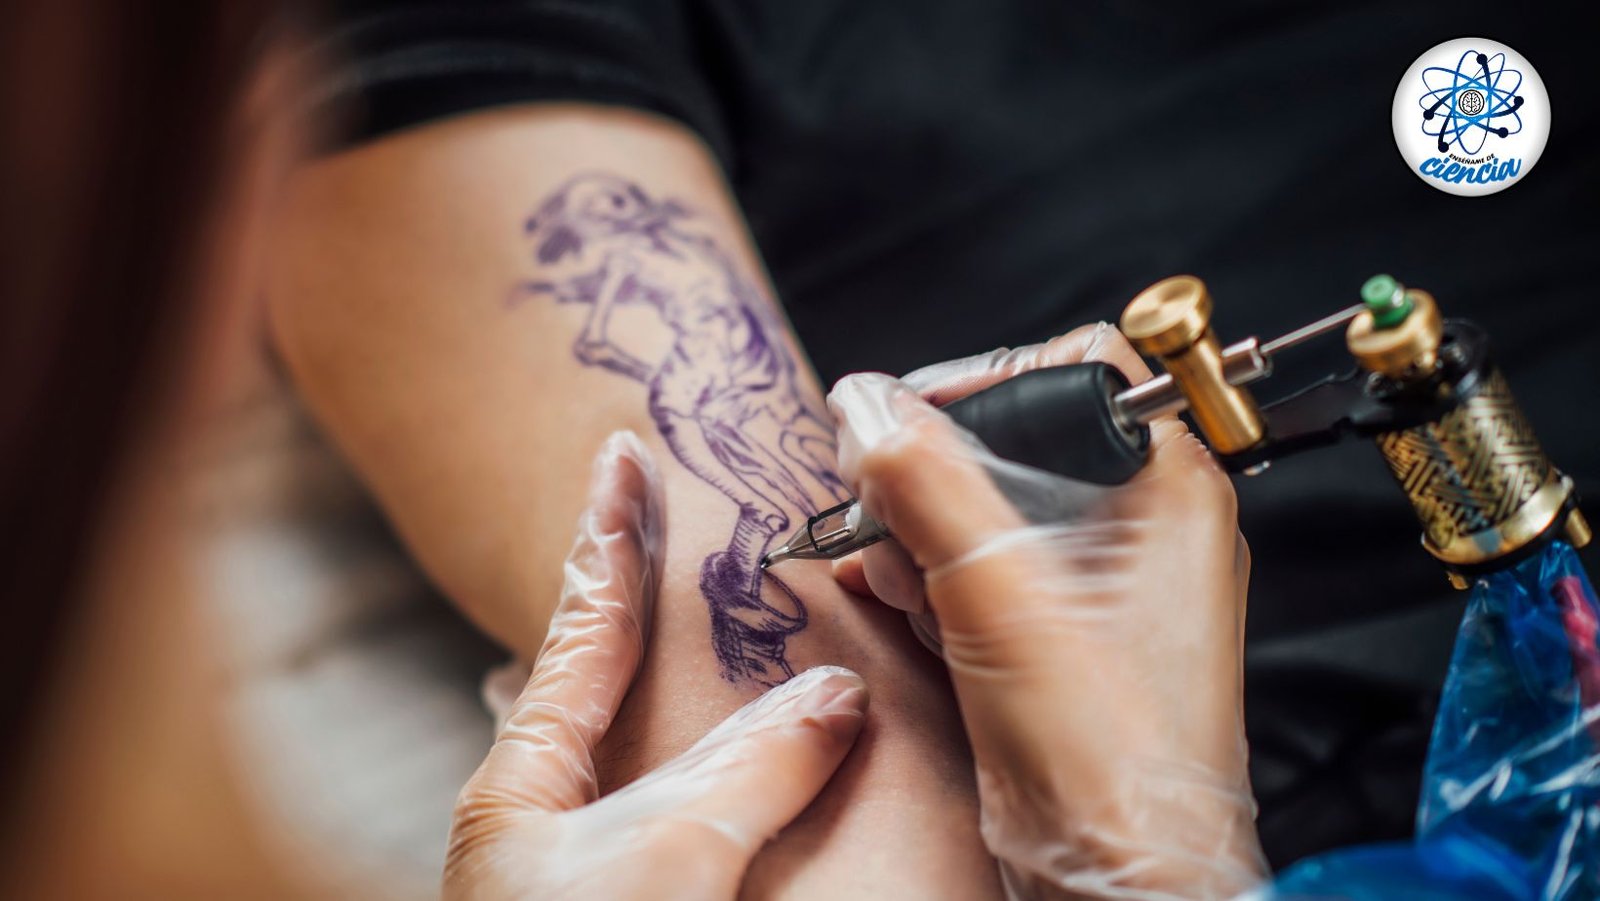 ¡Alerta de seguridad! Estudio de la FDA revela riesgos de bacterias peligrosas en tintas de tatuajes